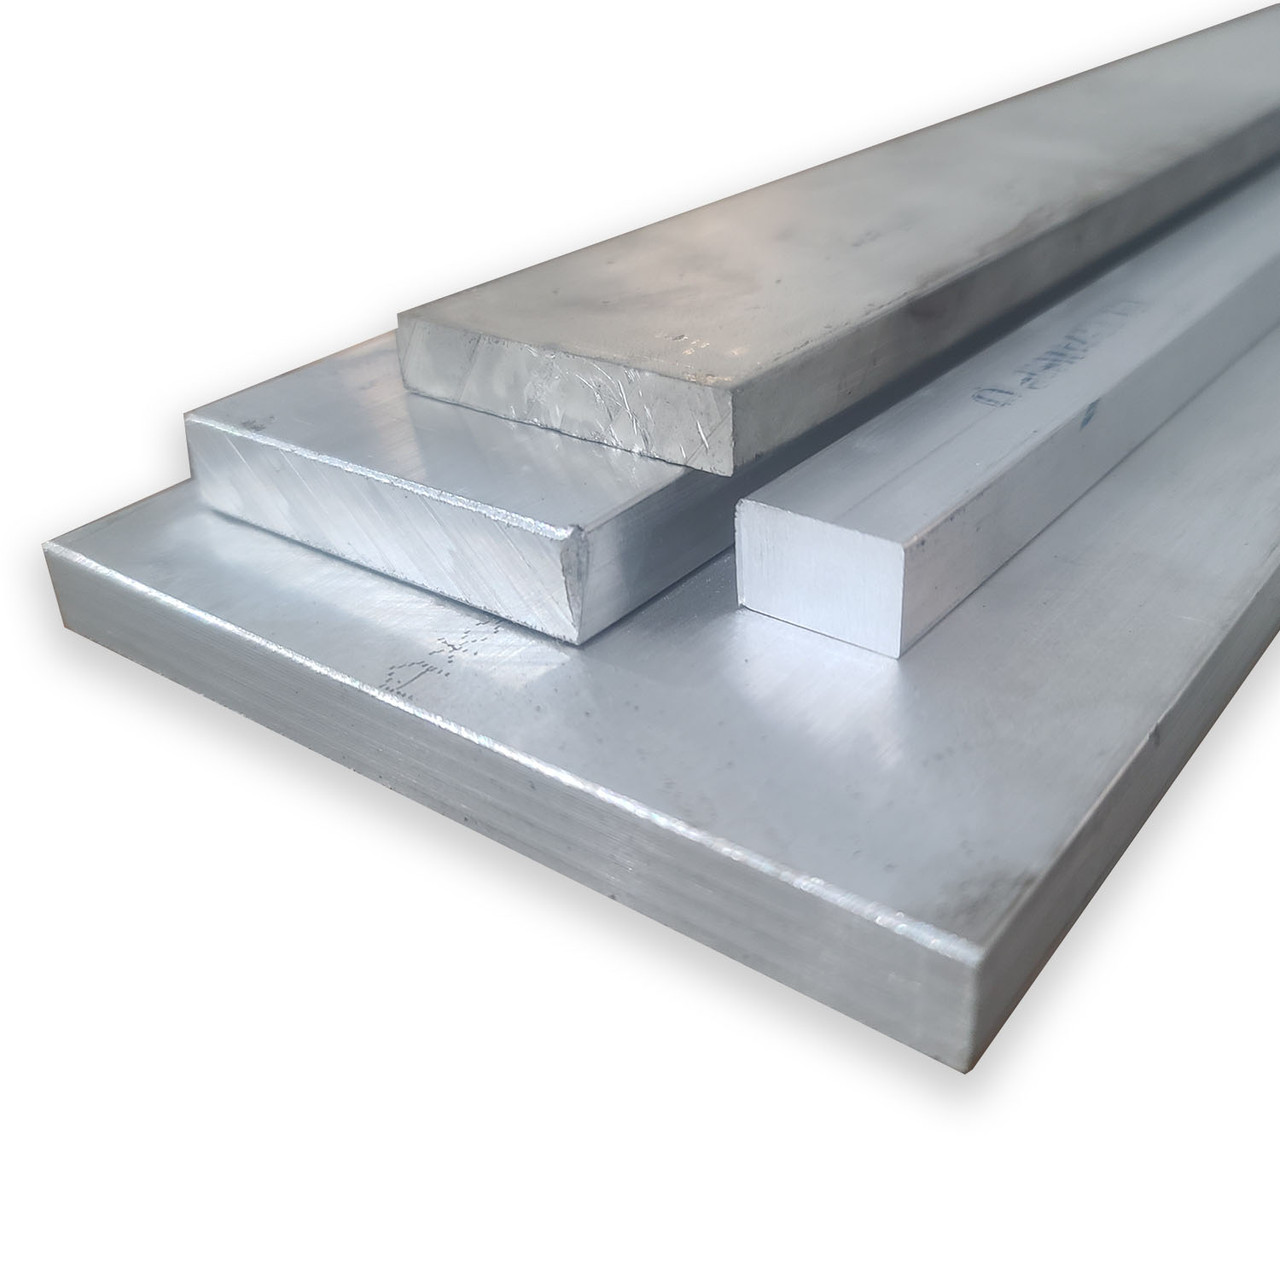 0.500" x 1.5" x 11", 6061-T6511 Aluminum Flat Bar